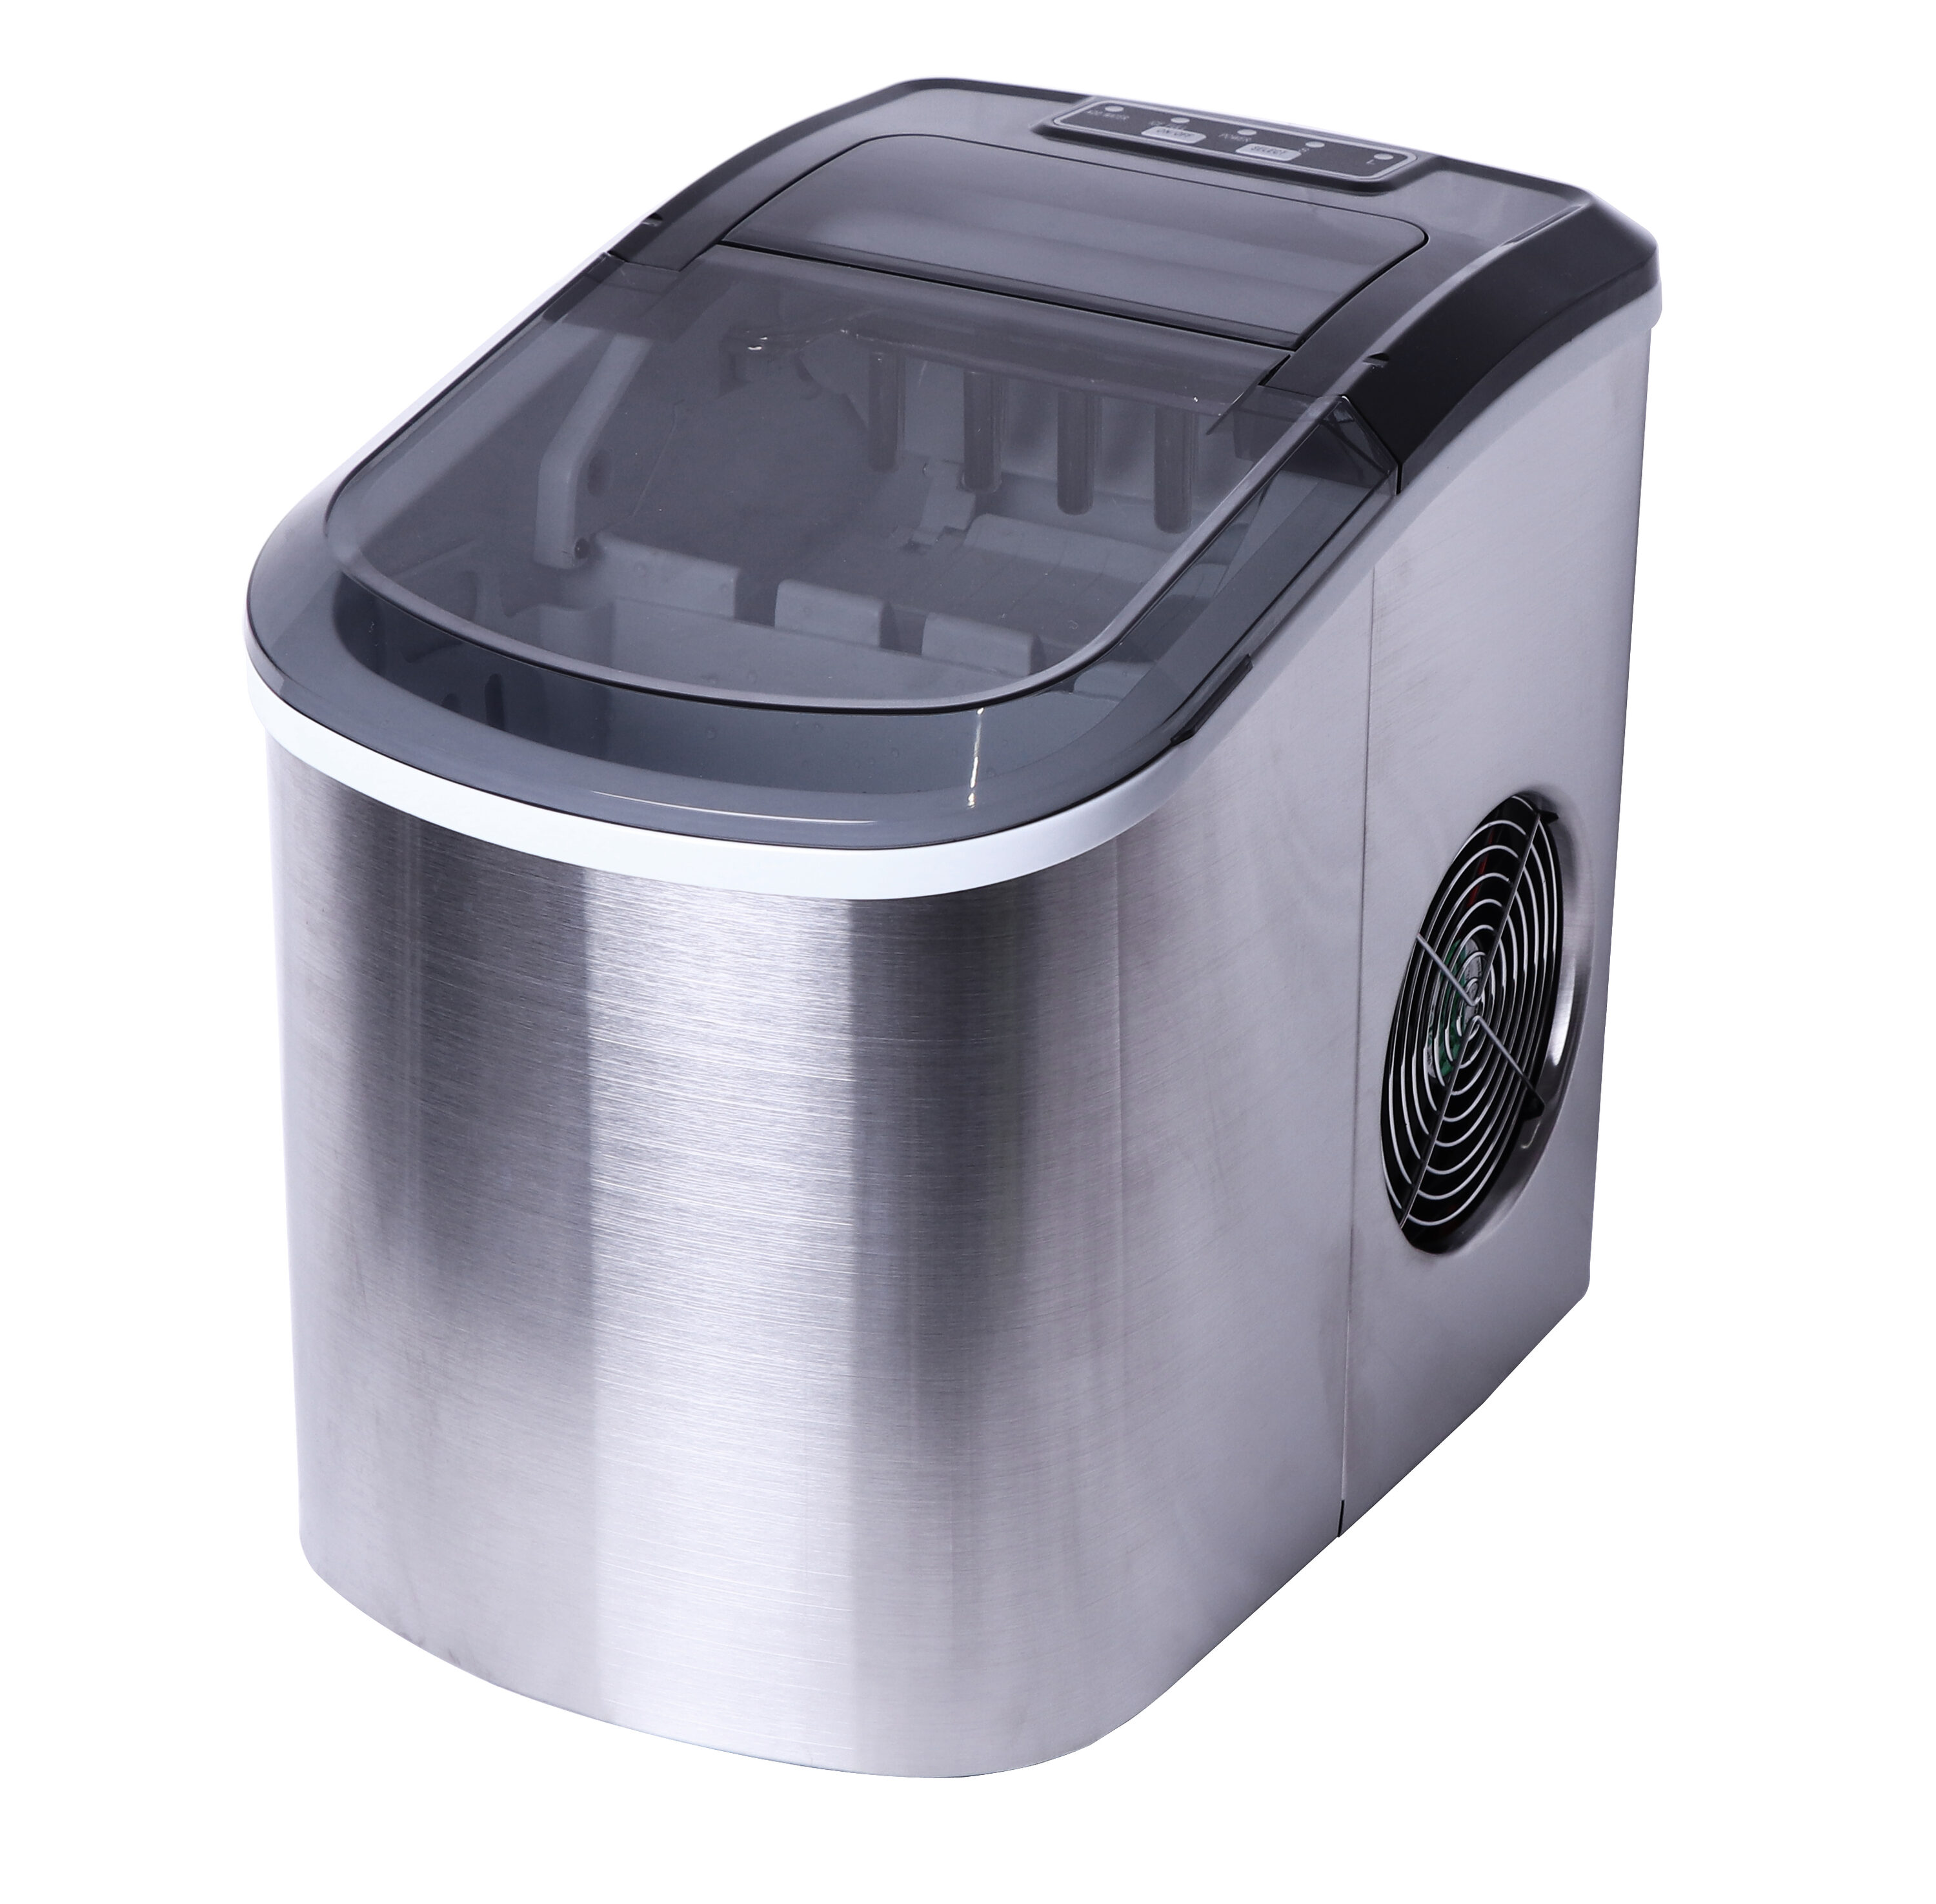 Z-Linke Small Countertop Ice Maker Machine, Portable, 26 Pound